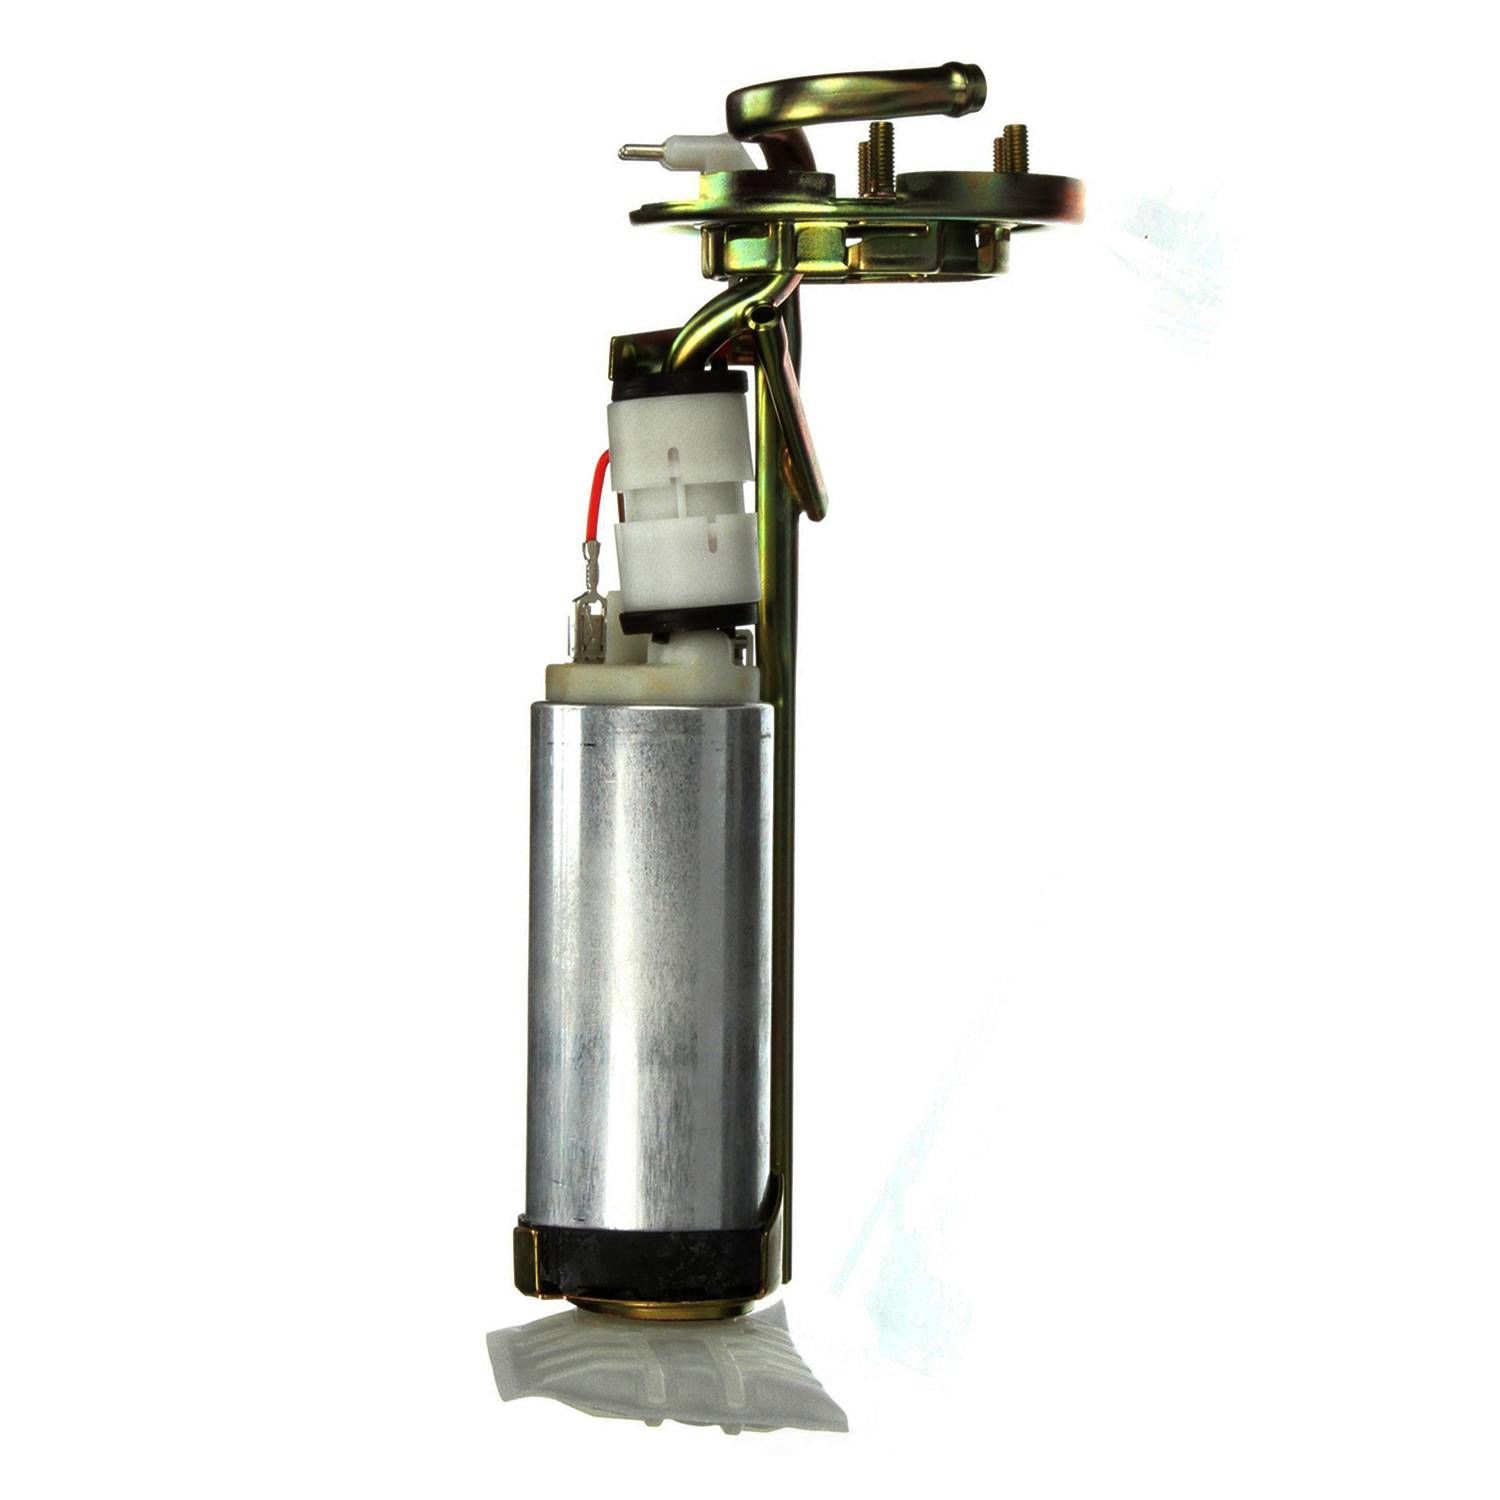 CONTINENTAL AUTOMOTIVE - Fuel Pump Module Assembly - CA1 228-220-007-001Z